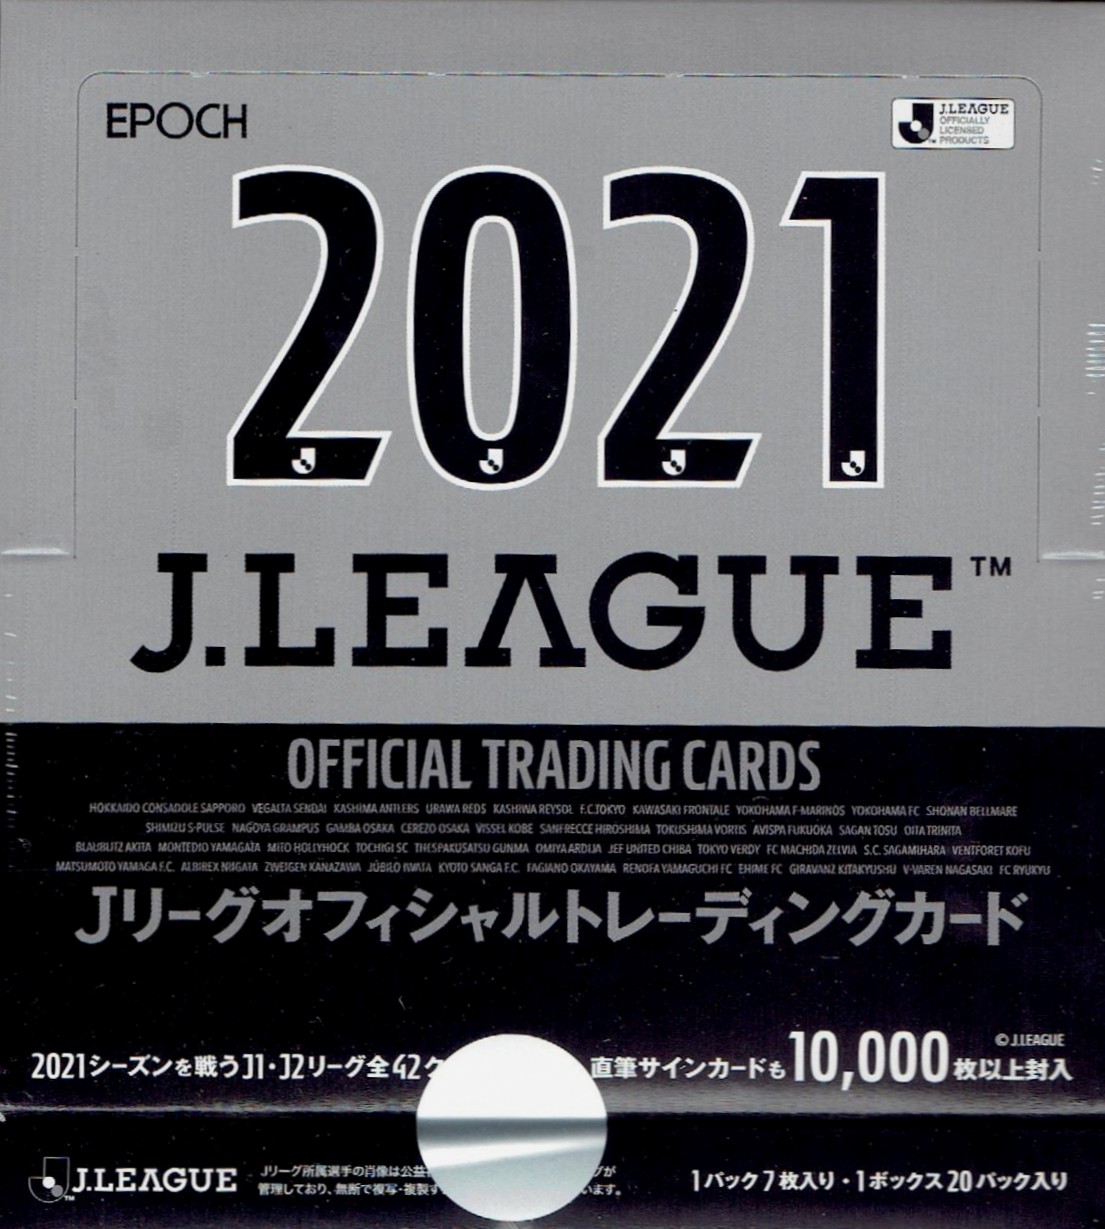 ⚽ EPOCH 2021 Jリーグオフィシャルトレーディングカード【製品情報 